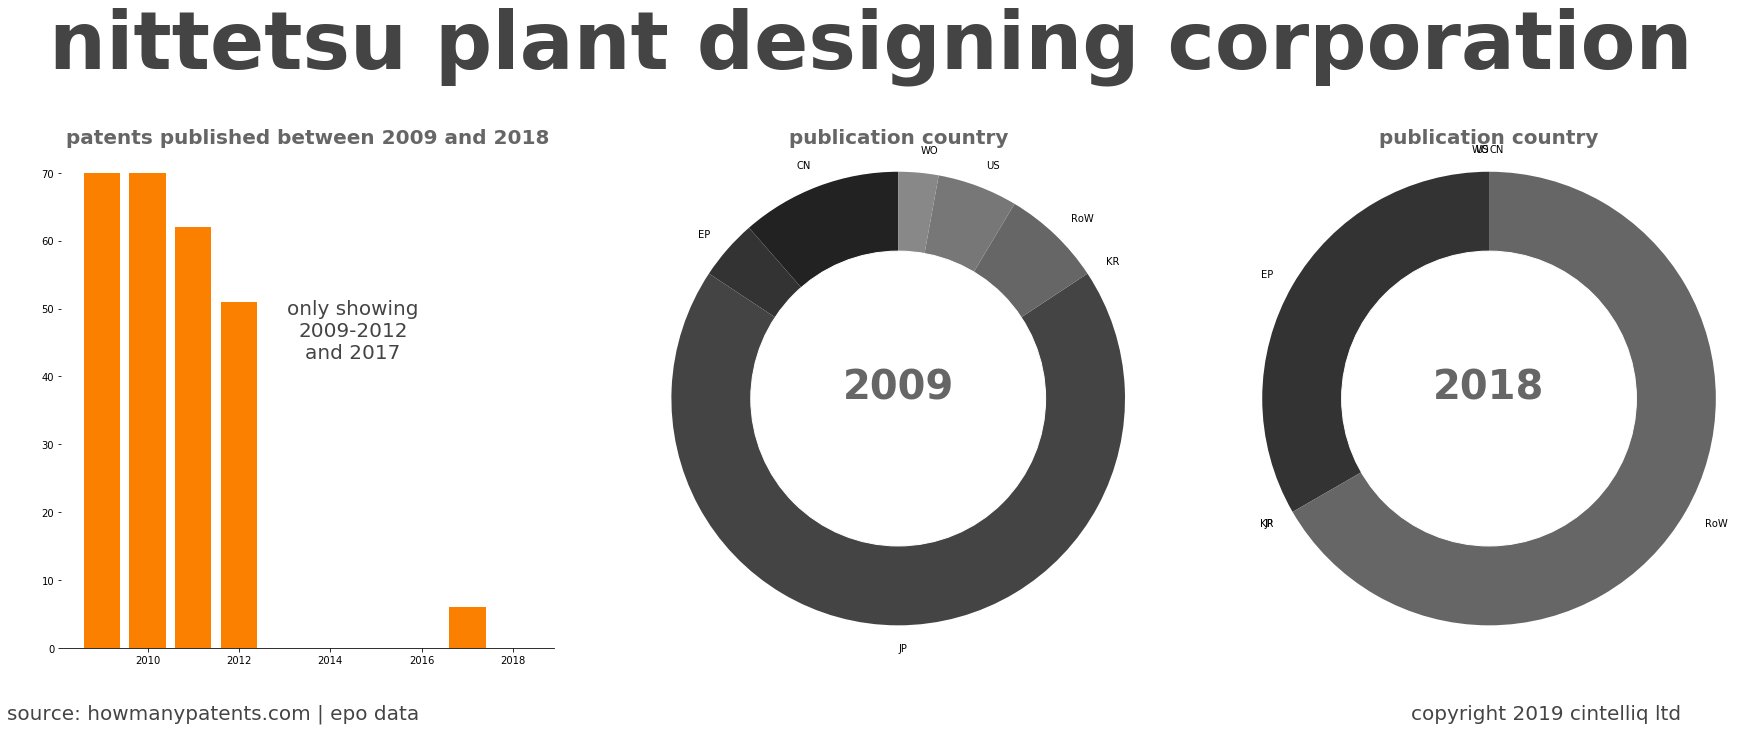 summary of patents for Nittetsu Plant Designing Corporation